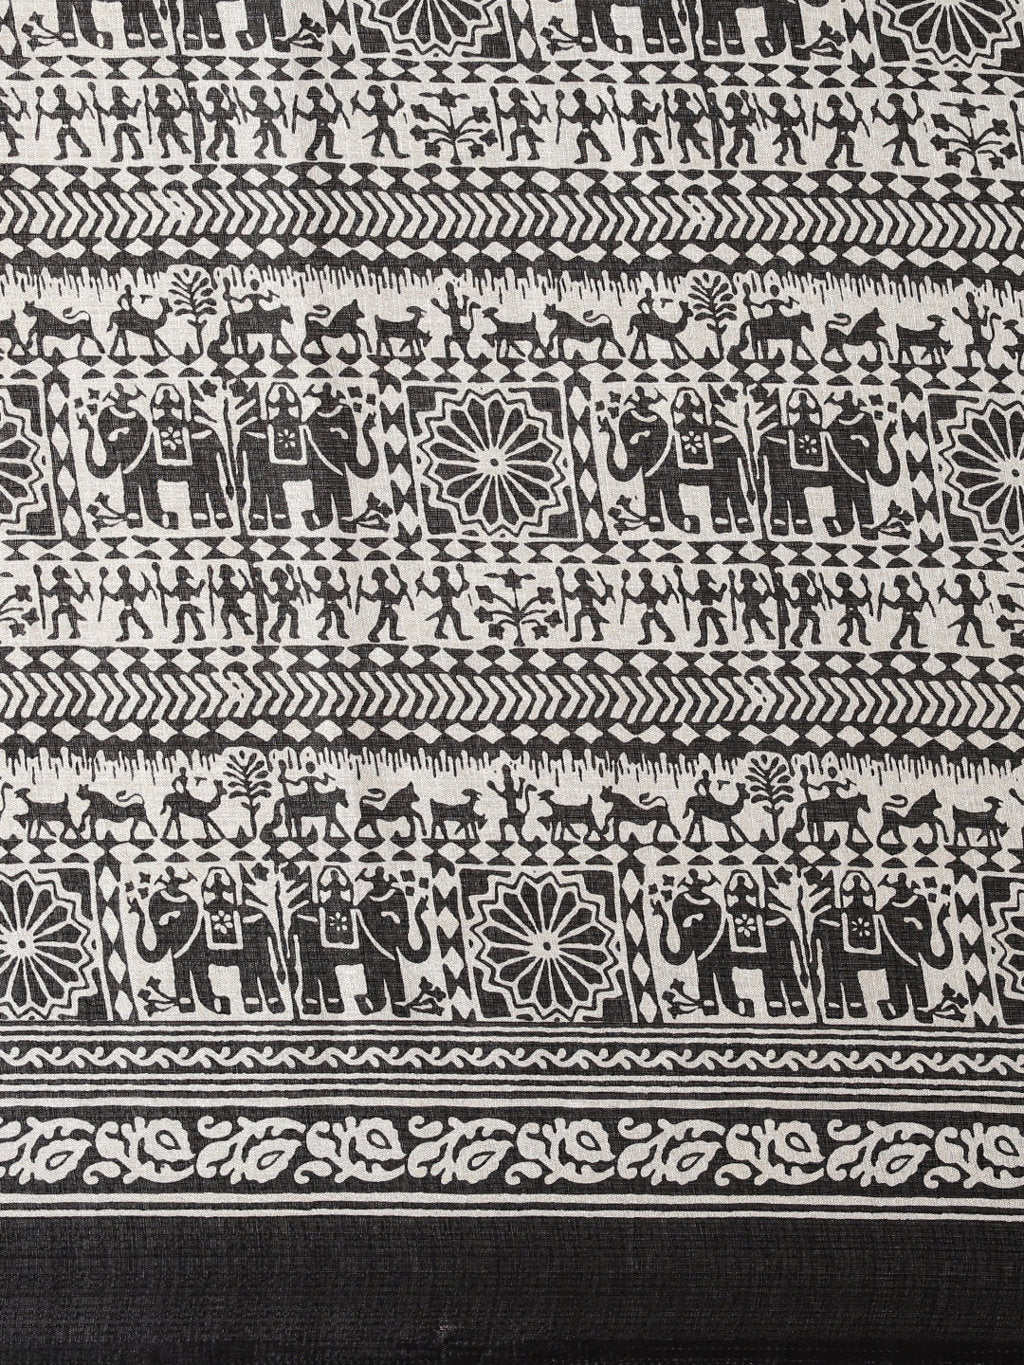 Women's Black Art Silk Printed Traditional Tassle Saree - Sangam Prints